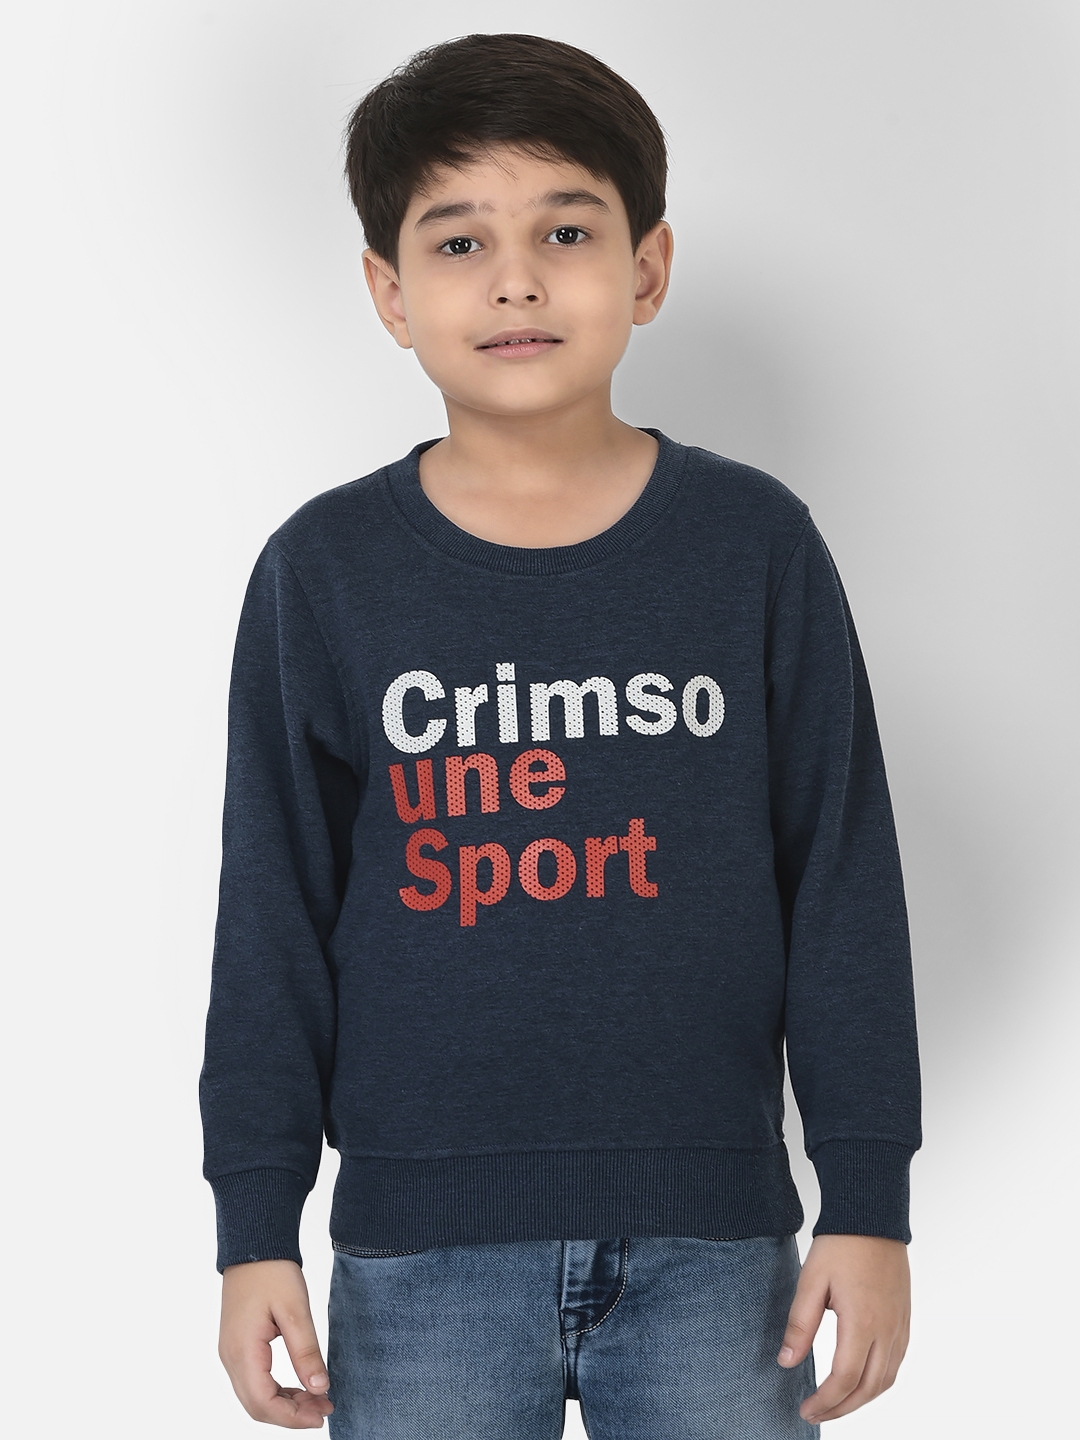 Crimsoune Club corduroy mens shirt size medium gently used | eBay